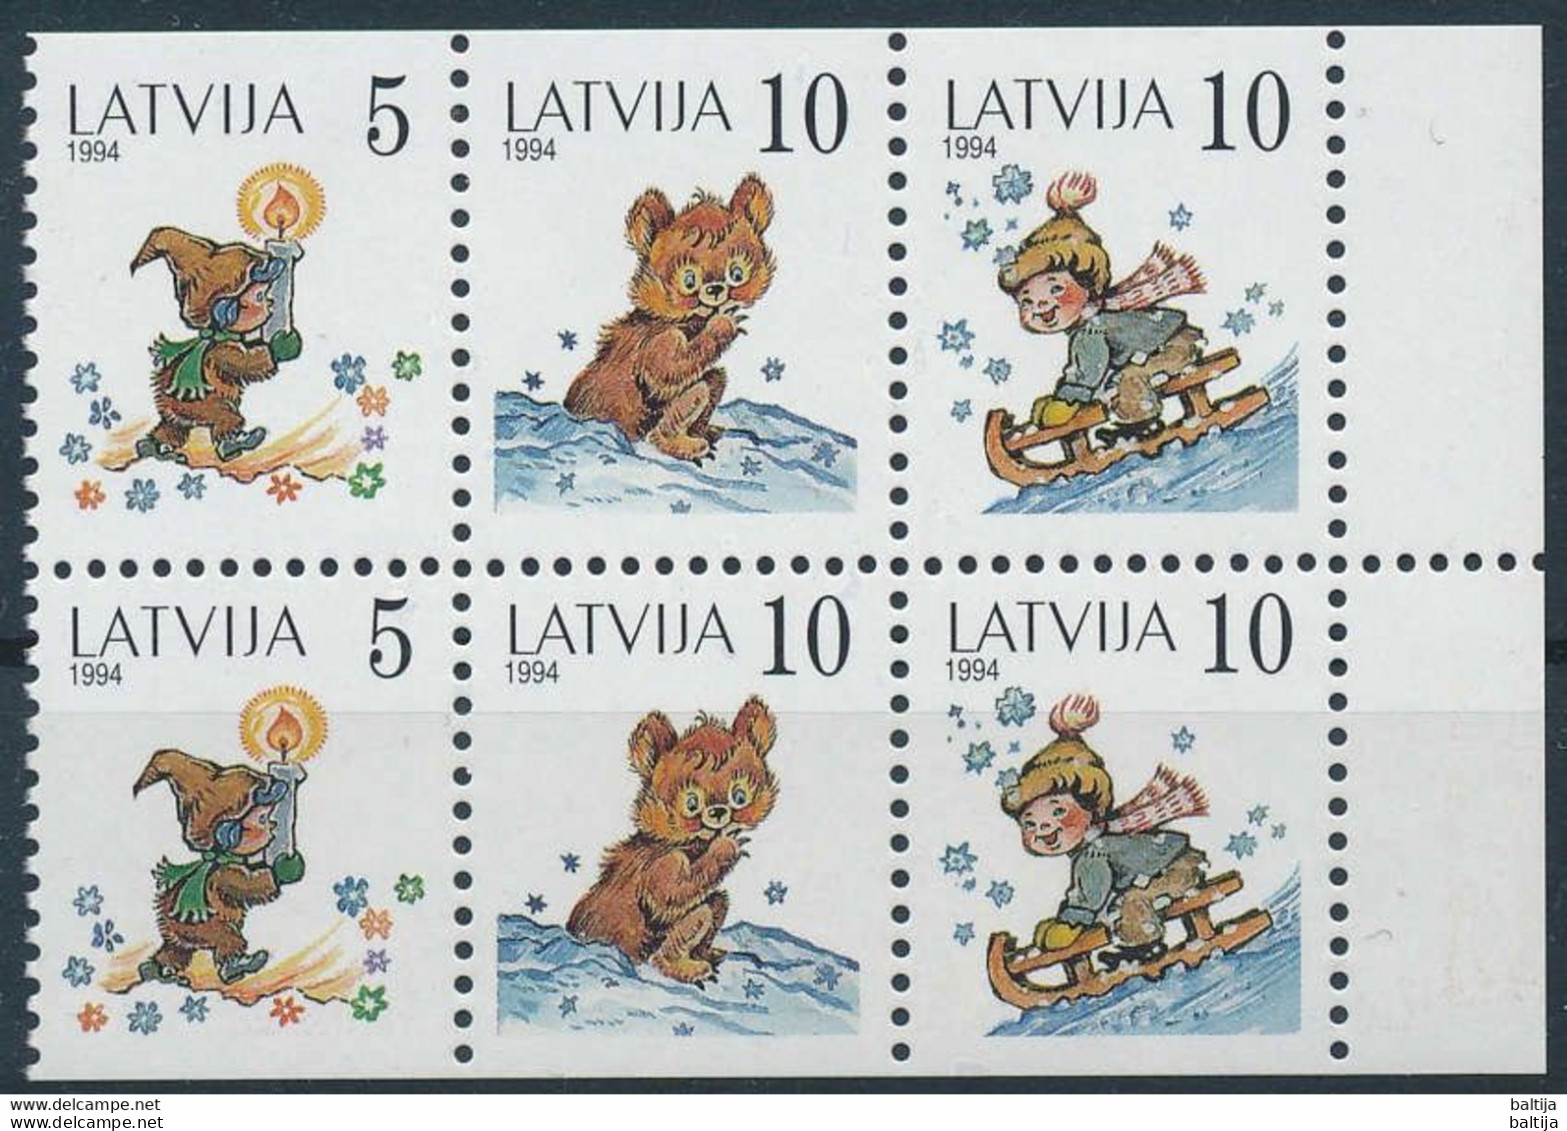 Mi 386-388, ** MNH / Margarita Stāraste 80th Birthday, Booklet Pane / Fairy Tale, Teddy Bear, Children - Latvia